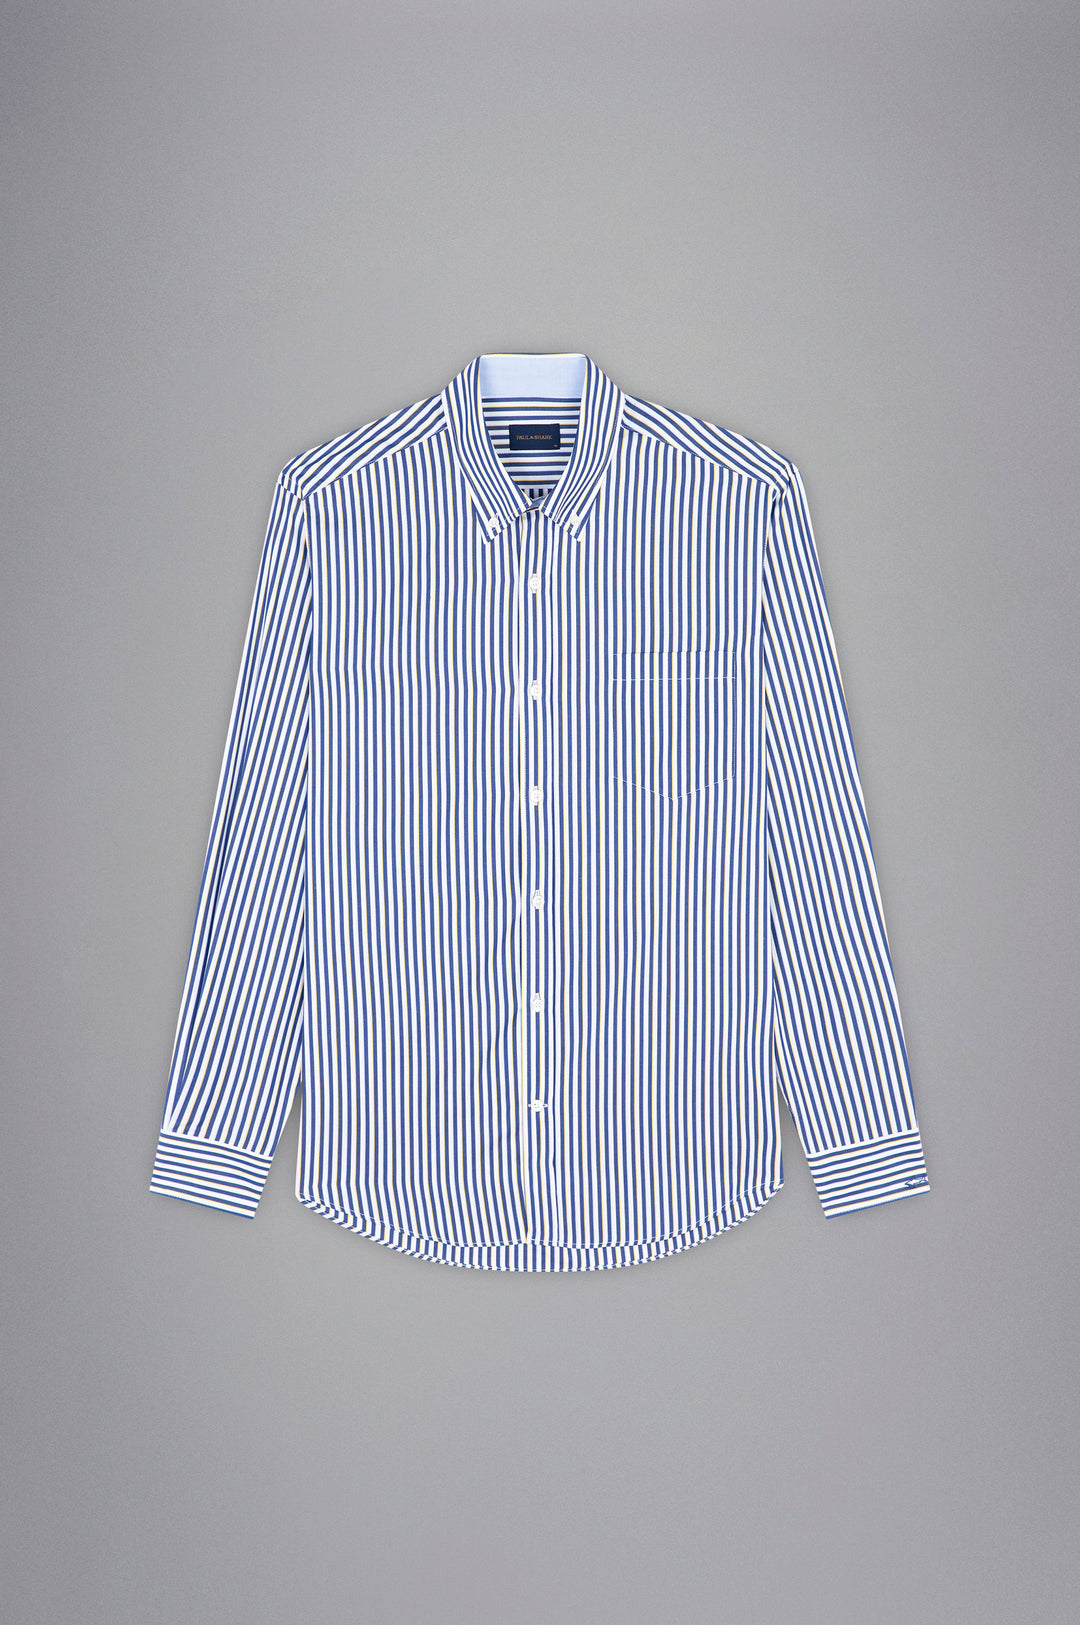 Cotton Poplin Multi Stripe Shirt in White/Blue/Yellow